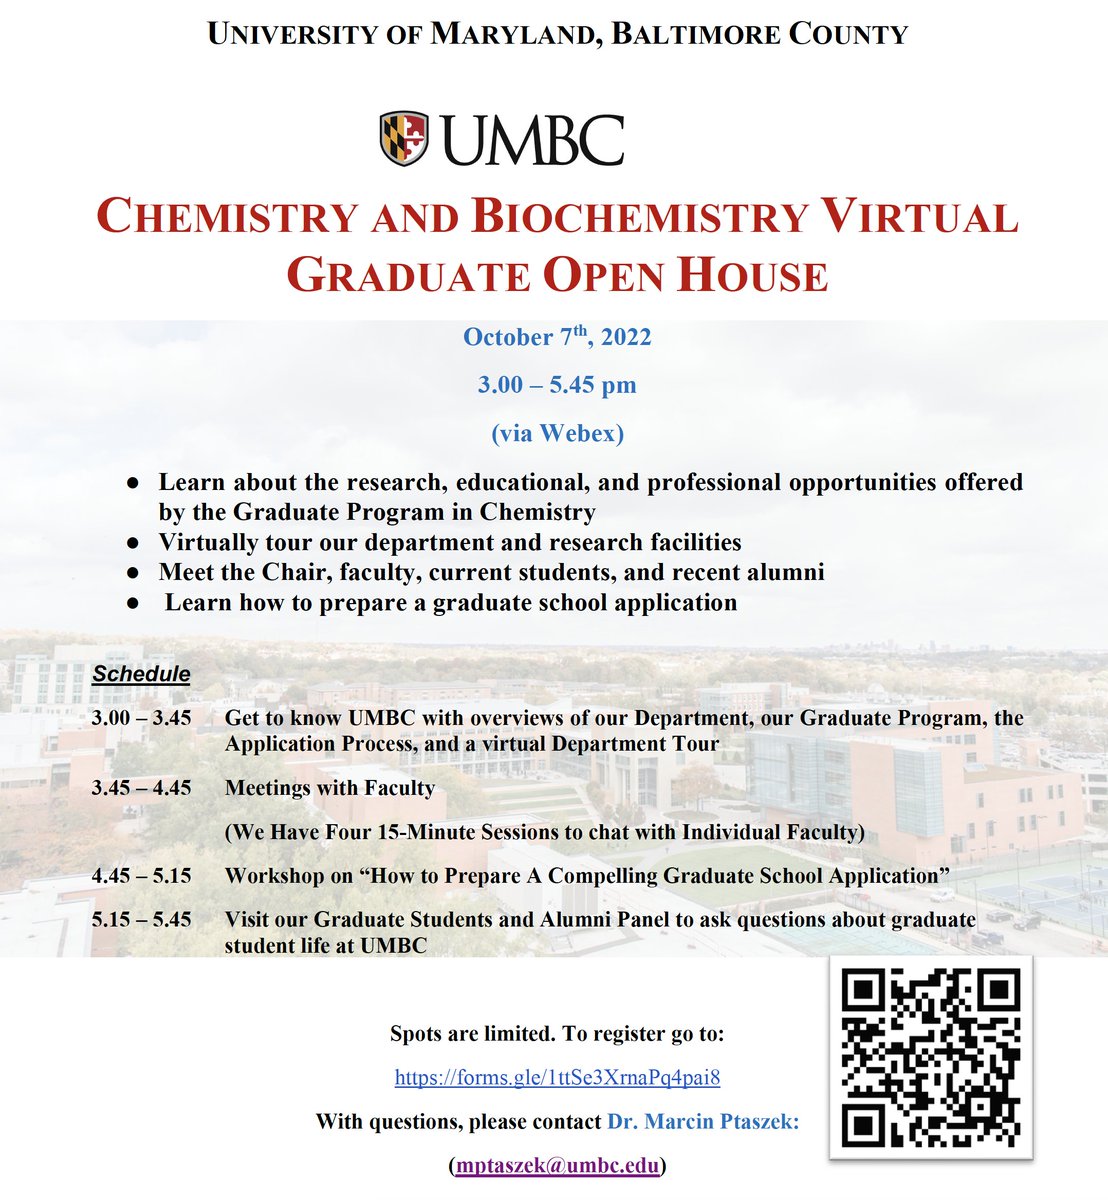 UMBC's new open house flyer, now with QR codes for registration! @VillanovaChem @Rutgers_Chem @umbc_lsamp @MorganStateU @PSU_BCS @LehighValleyACS @LehighChem @ChemistryTcnj @washcoll @McDanielCollege @StevensonU @yorkcollegepa @TempleUniv @KutztownU